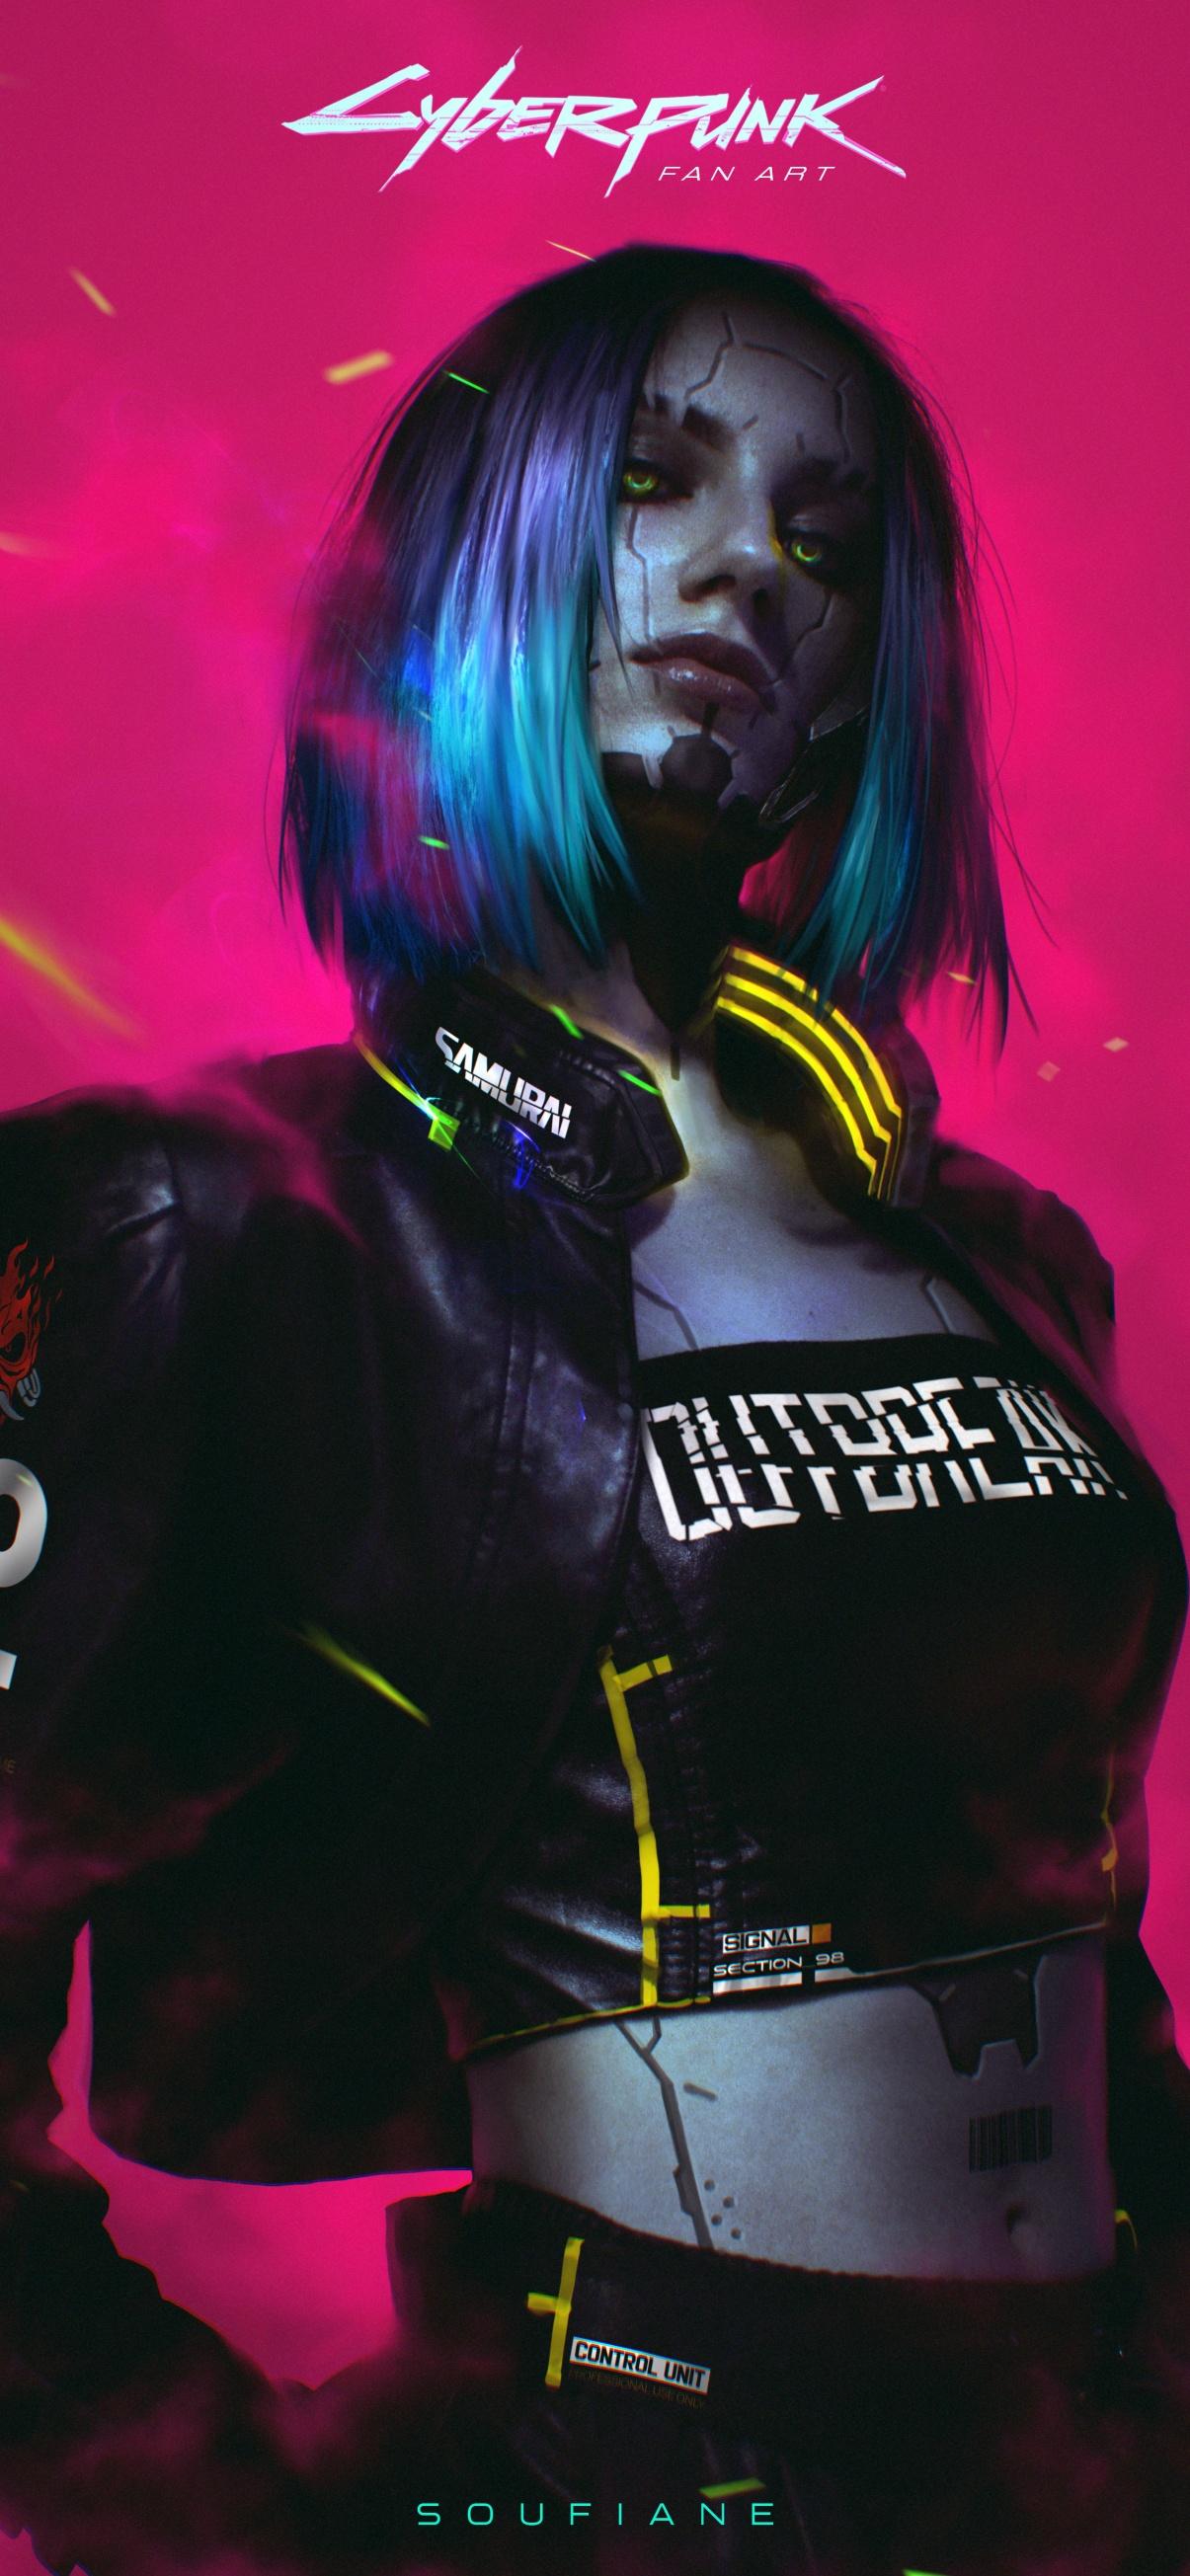 Cyberpunk Girl iPhone Wallpapers - Top Free Cyberpunk Girl iPhone ...